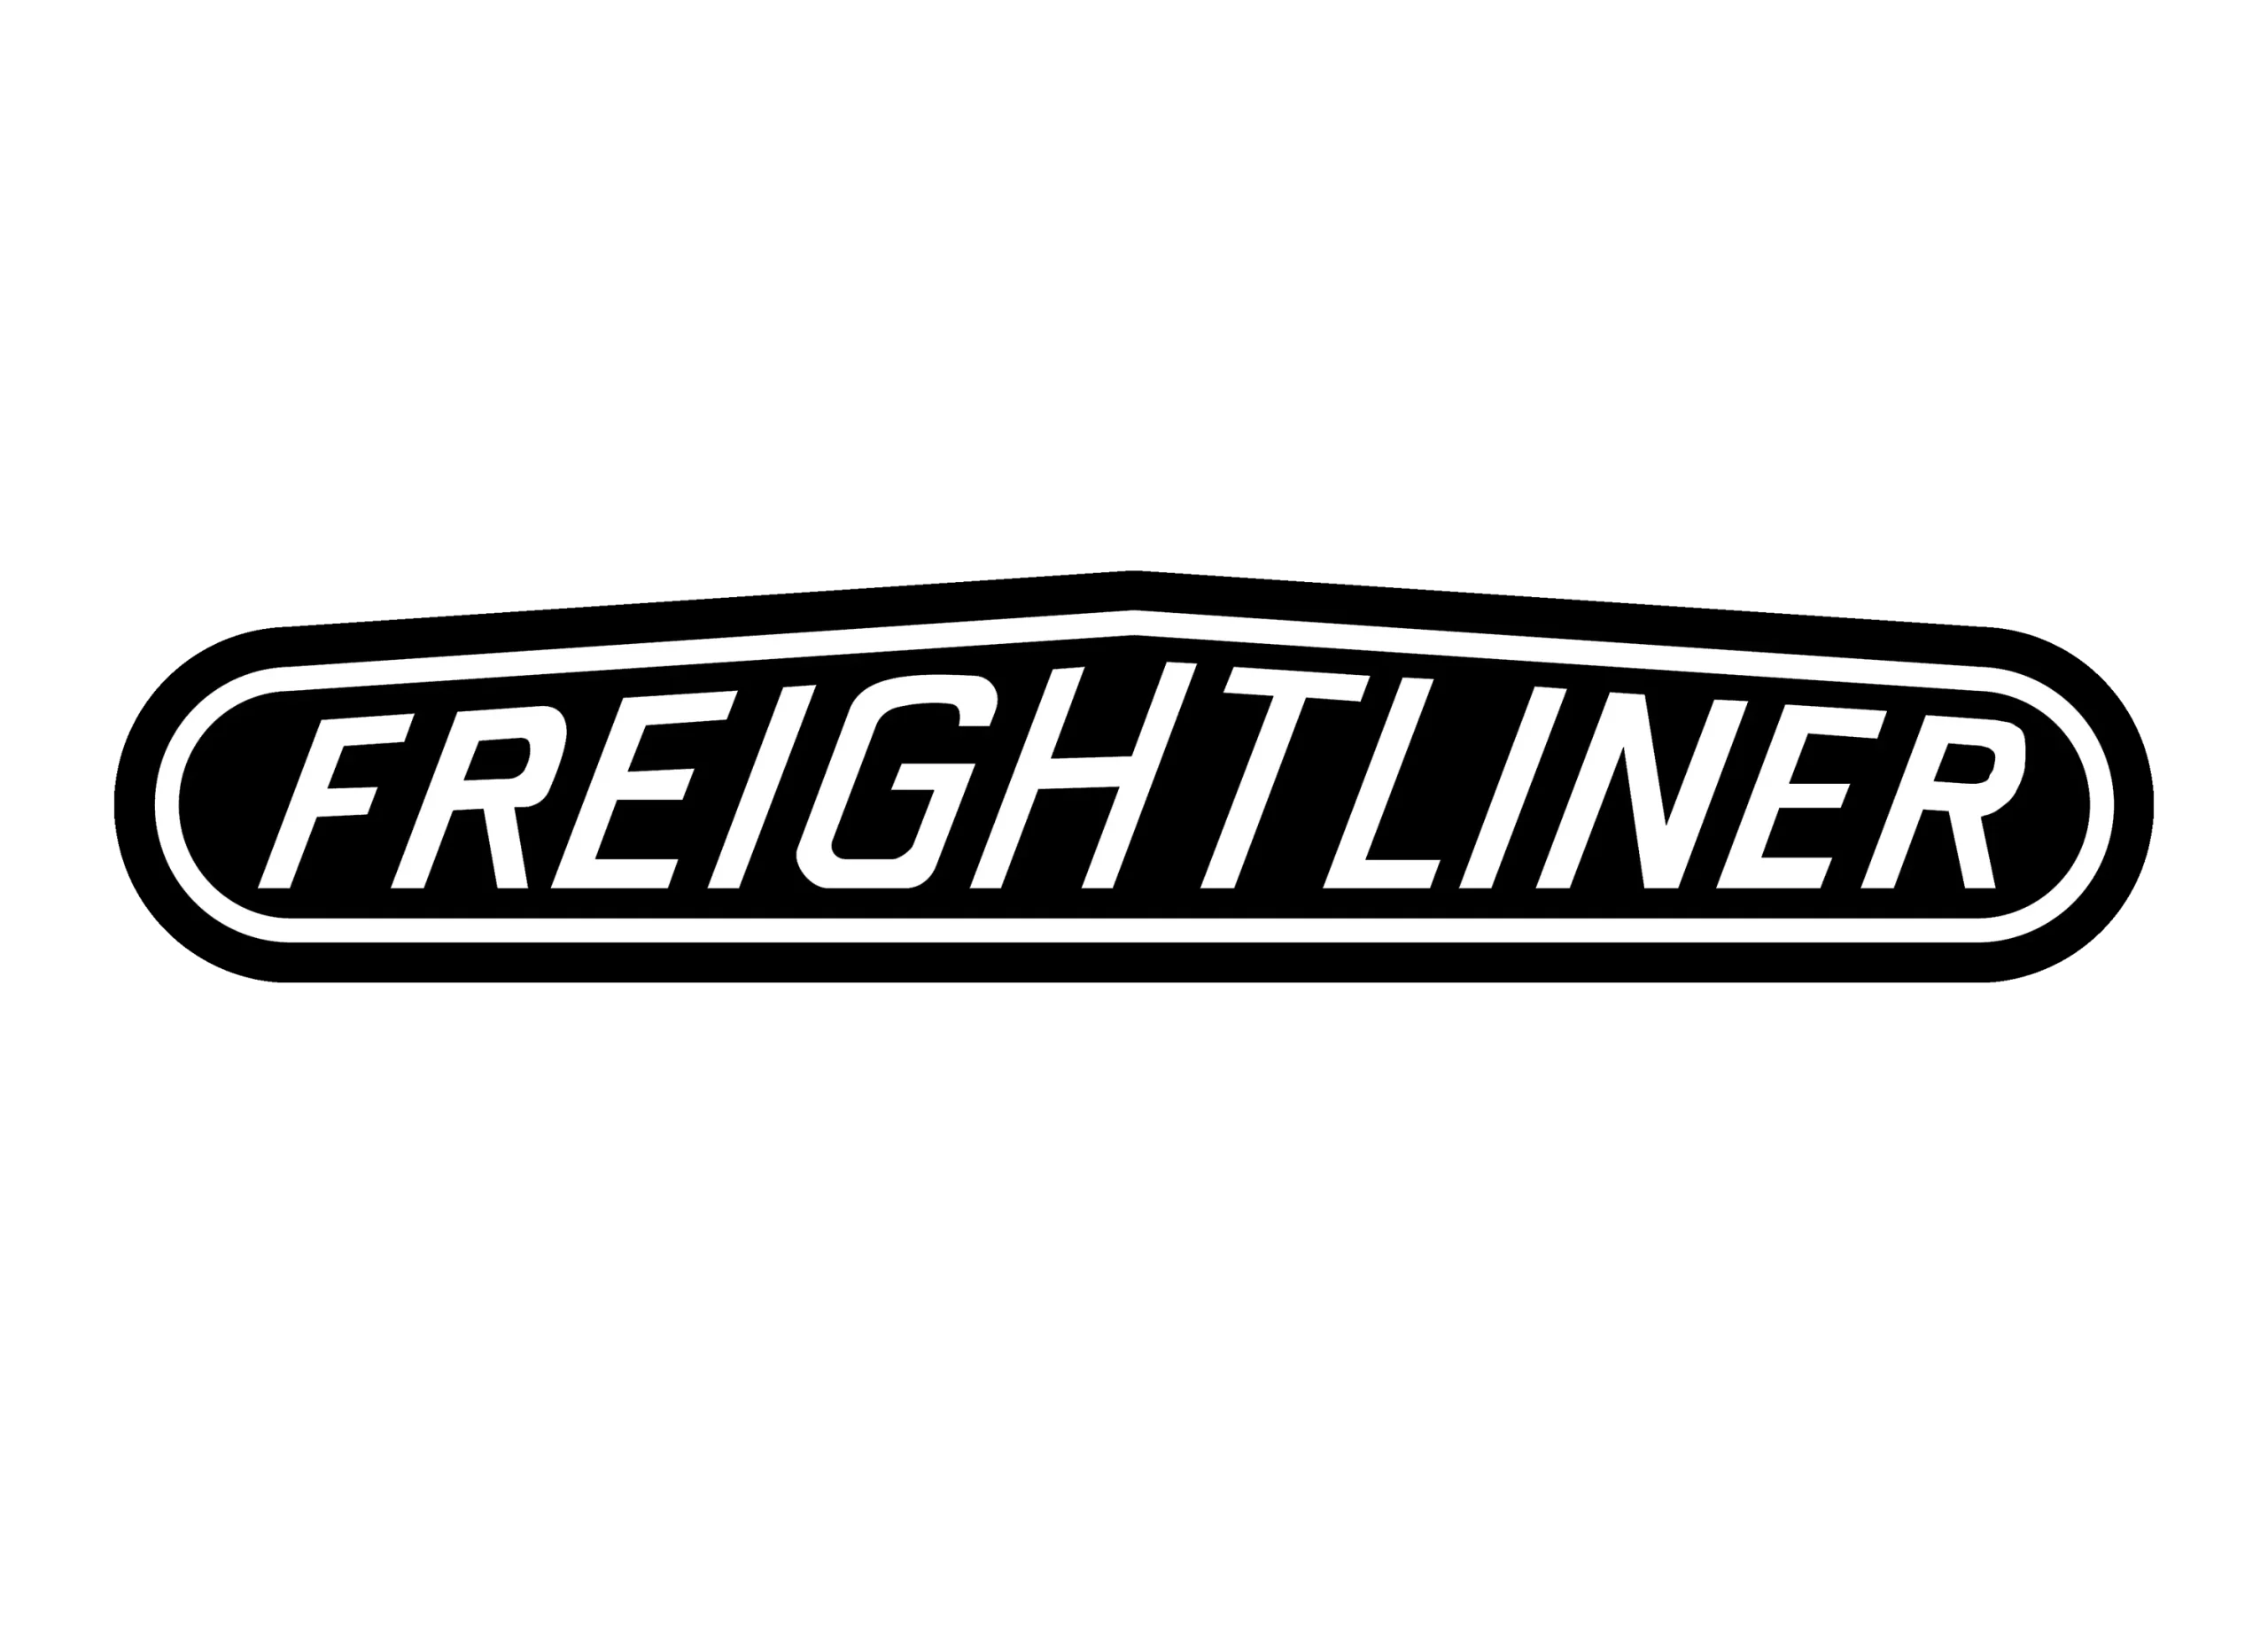 Freightliner logo 1974-1997